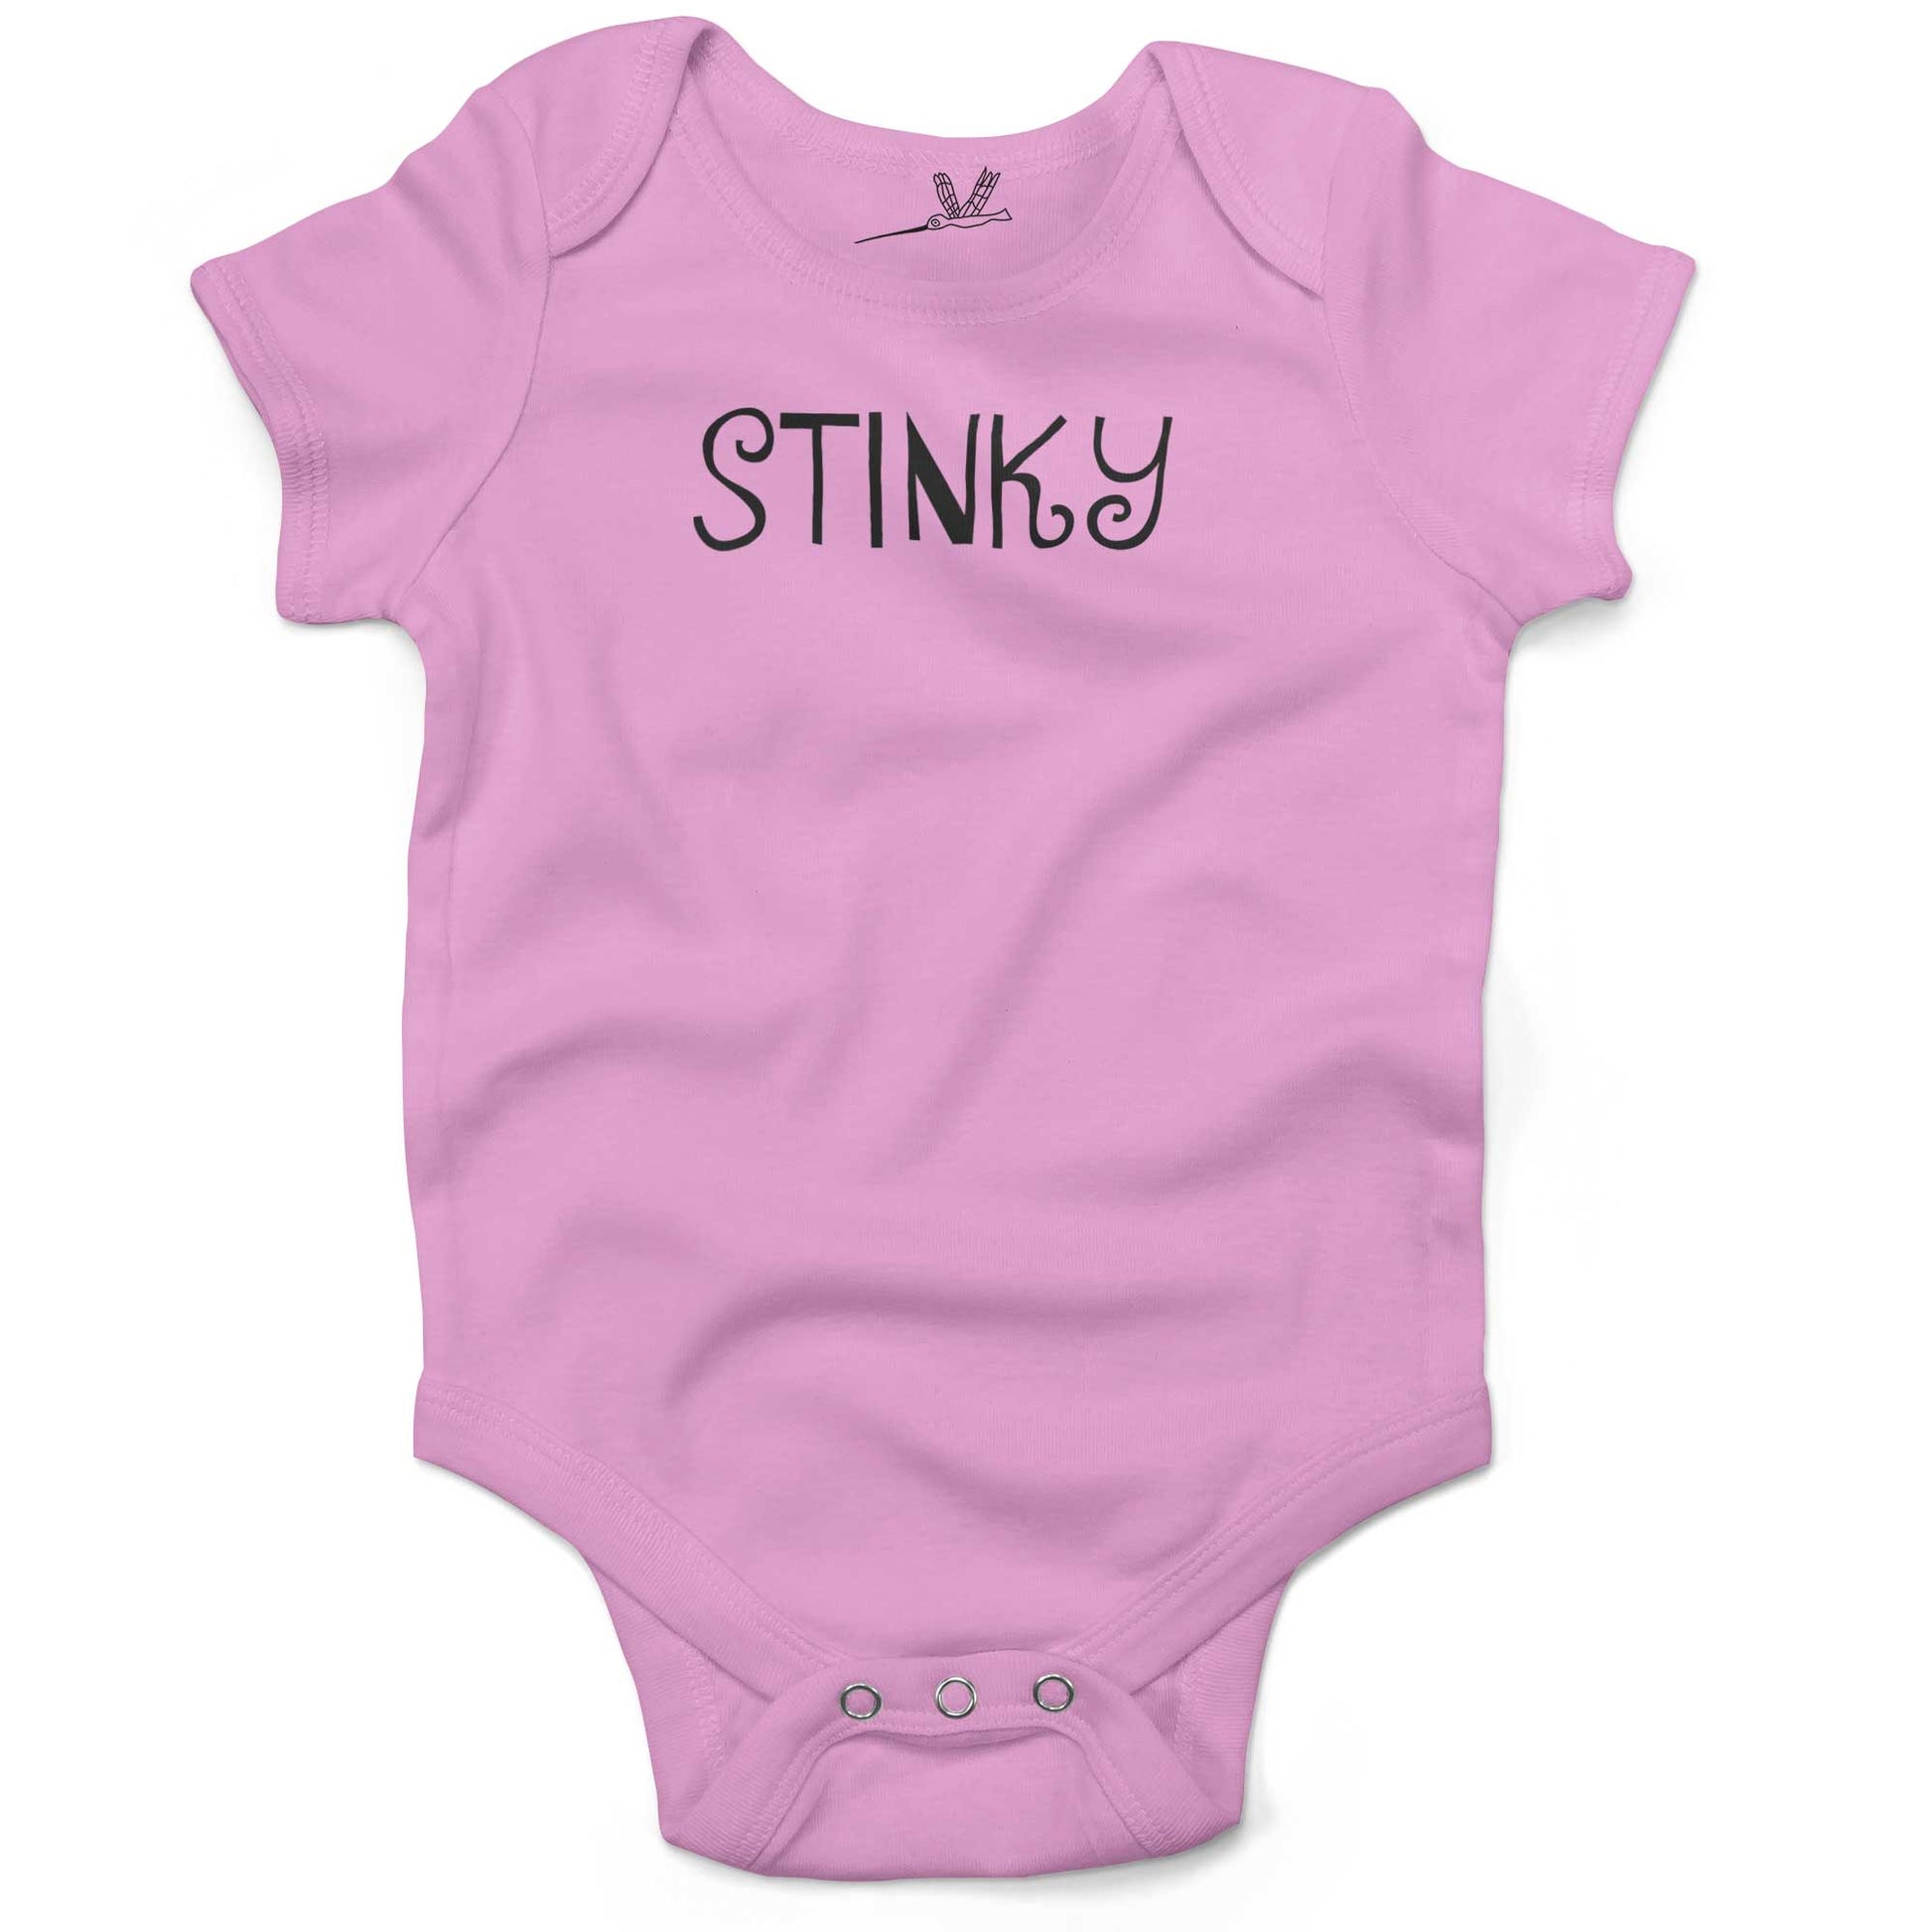 Stinky Infant Bodysuit or Raglan Baby Tee-Organic Pink-3-6 months